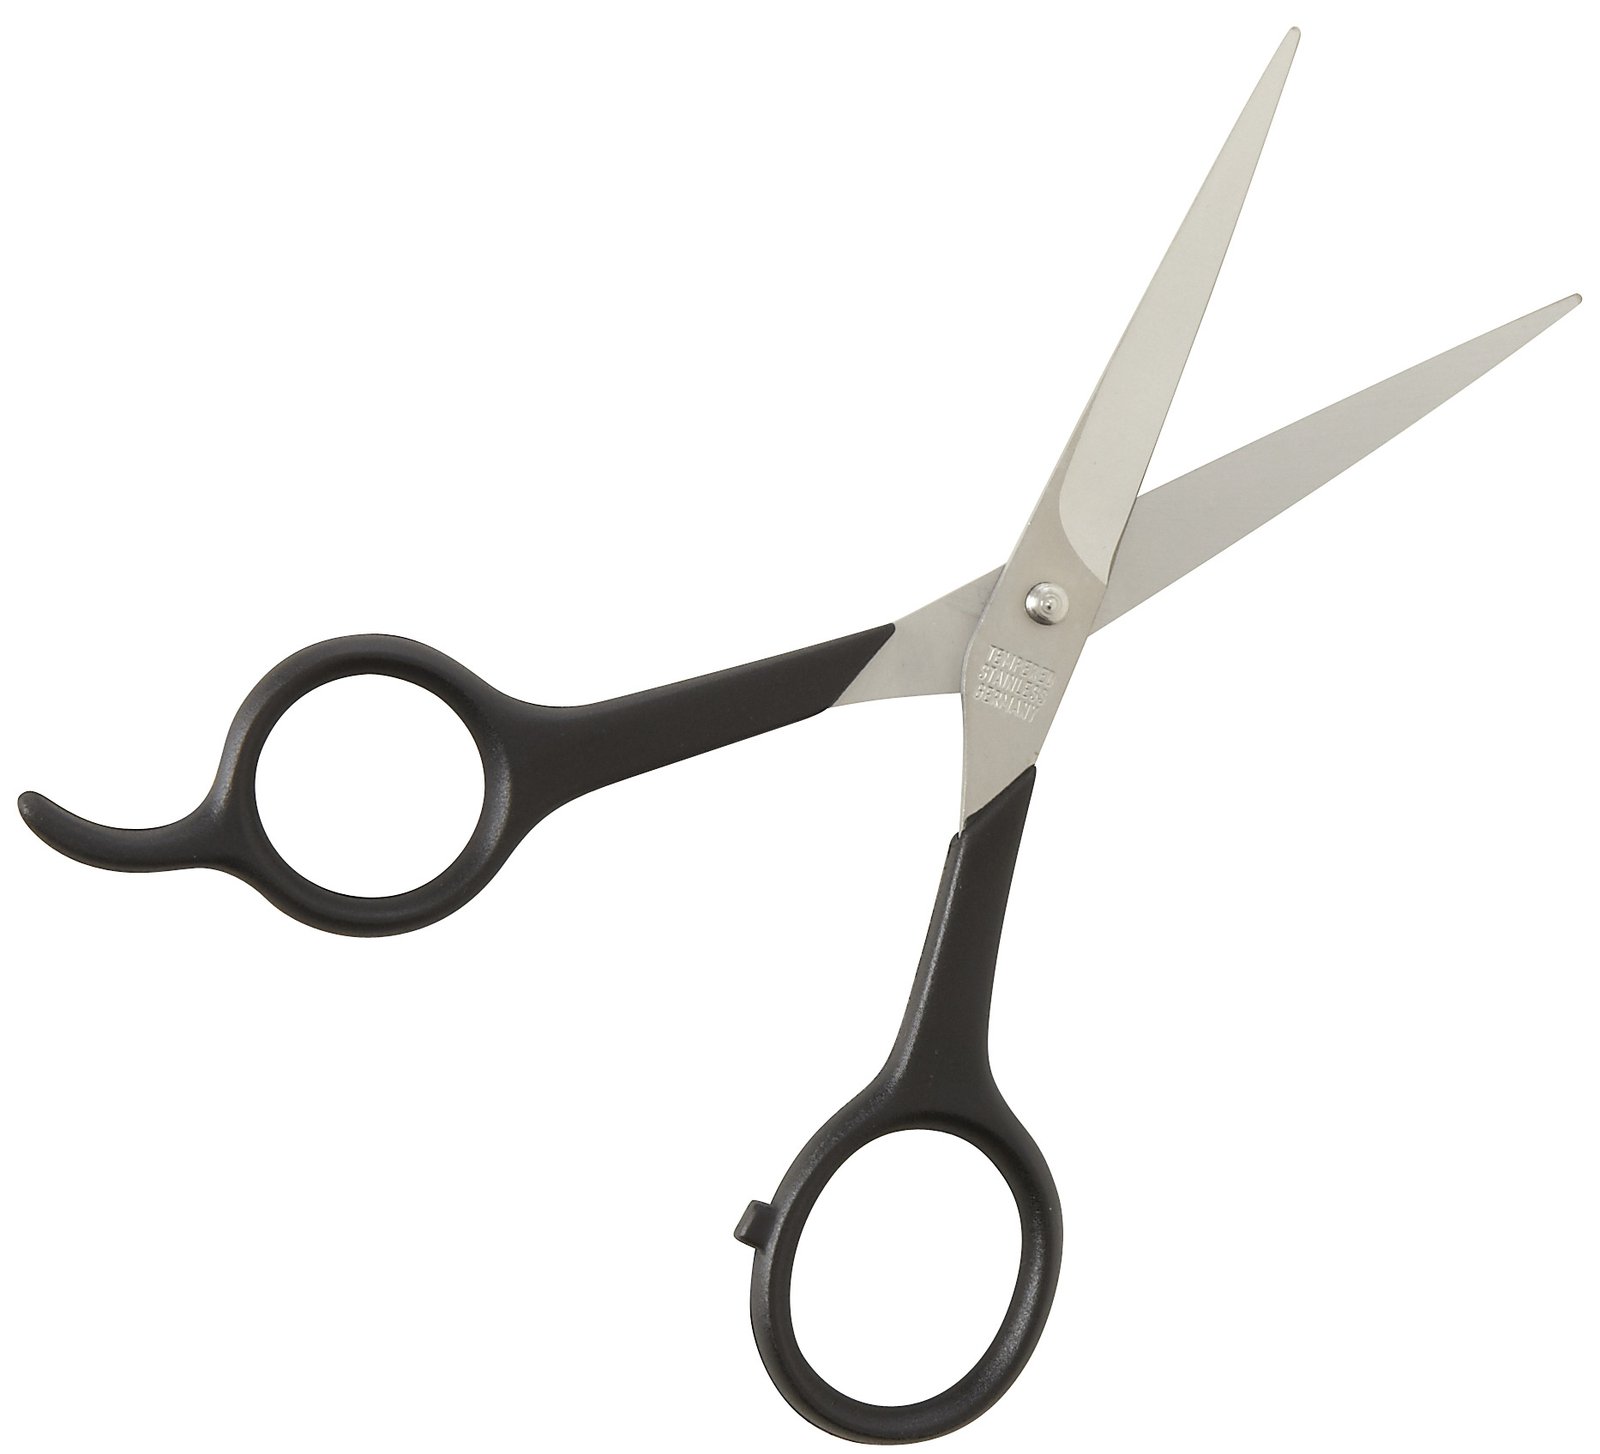 Hair scissors clip art hair scissors free clipart pictureicon